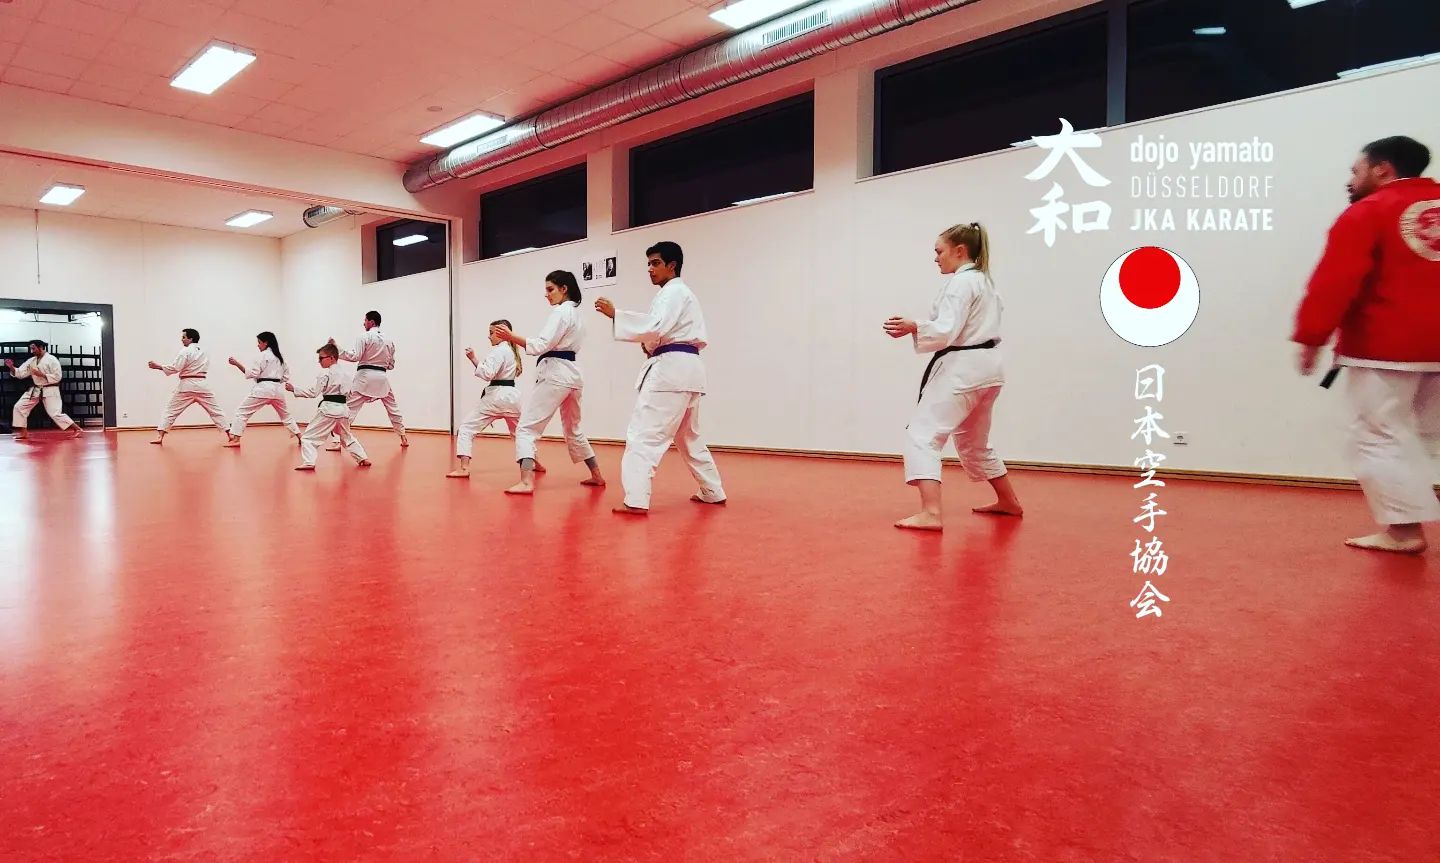 Training im Dojo Yamato Düsseldorf e.V. 🥋
.
.
.
.
.
.
.
#karate #training #fun #jka #djkb #kihon #kata #kumite #düsseldorf #duesseldorf #japan #sport #sportmotivation #shotokan #traditional #nrw #yamatoduesseldorf #fitness #fitnessmotivation #jkaKarate #jkakaratedo #neuss #ratingen #hilden #leverkusen #kaarst #selbstbstbewusstsein #selbstvertrauen